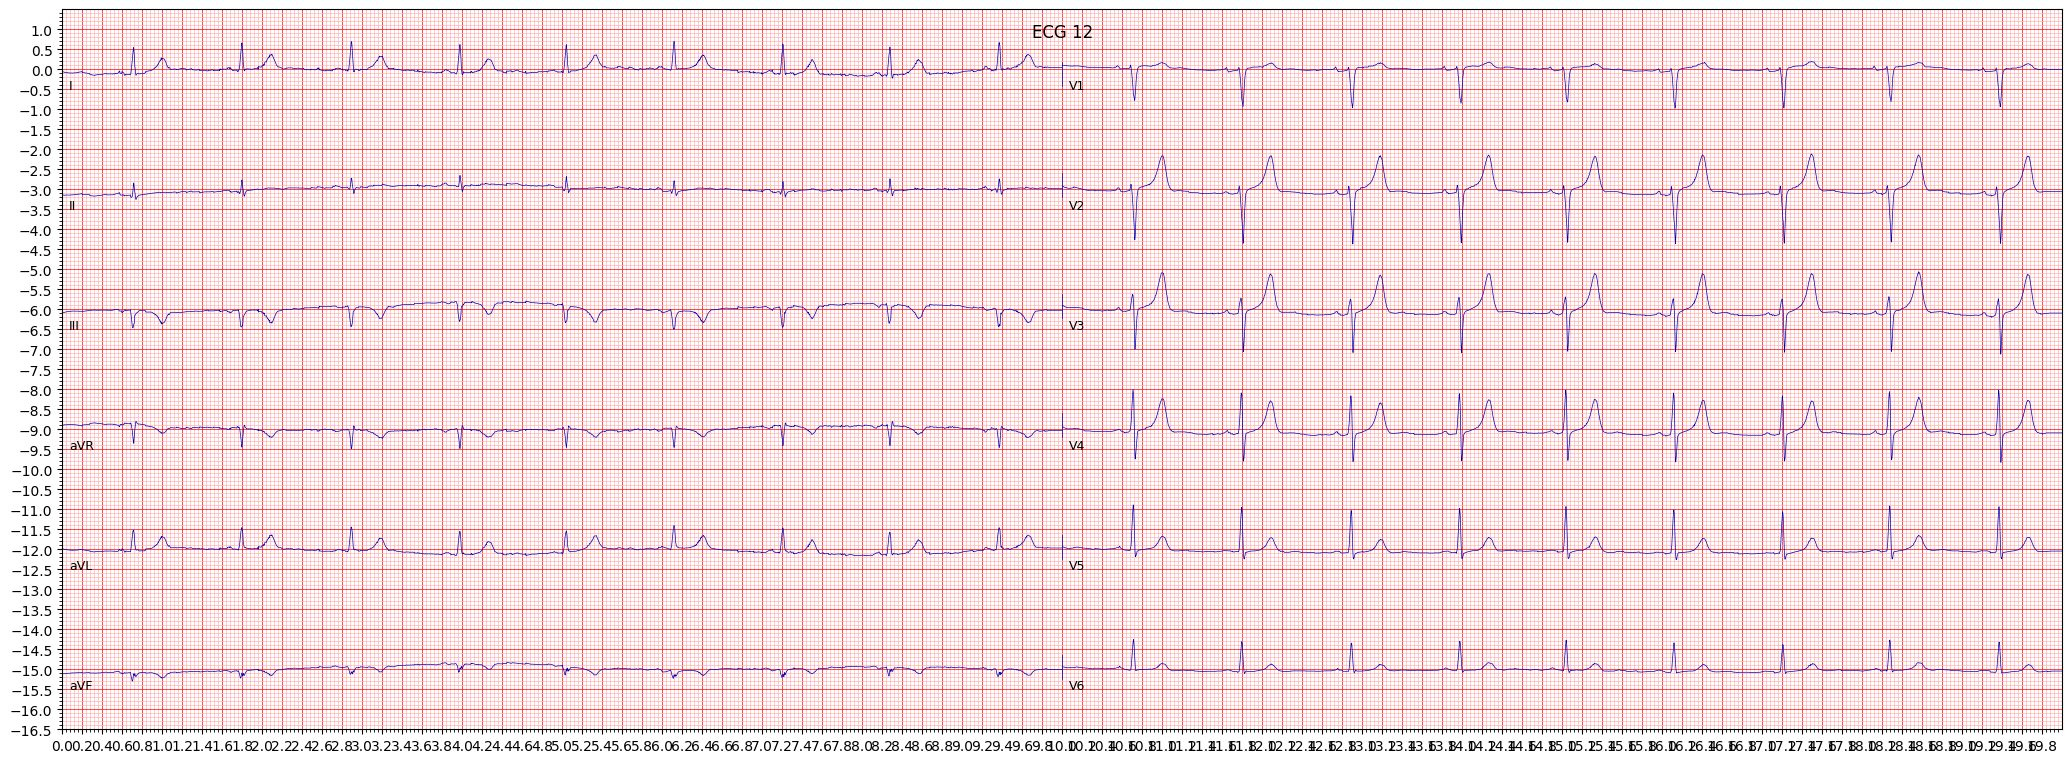 inferior myocardial infarction (IMI) example 1373